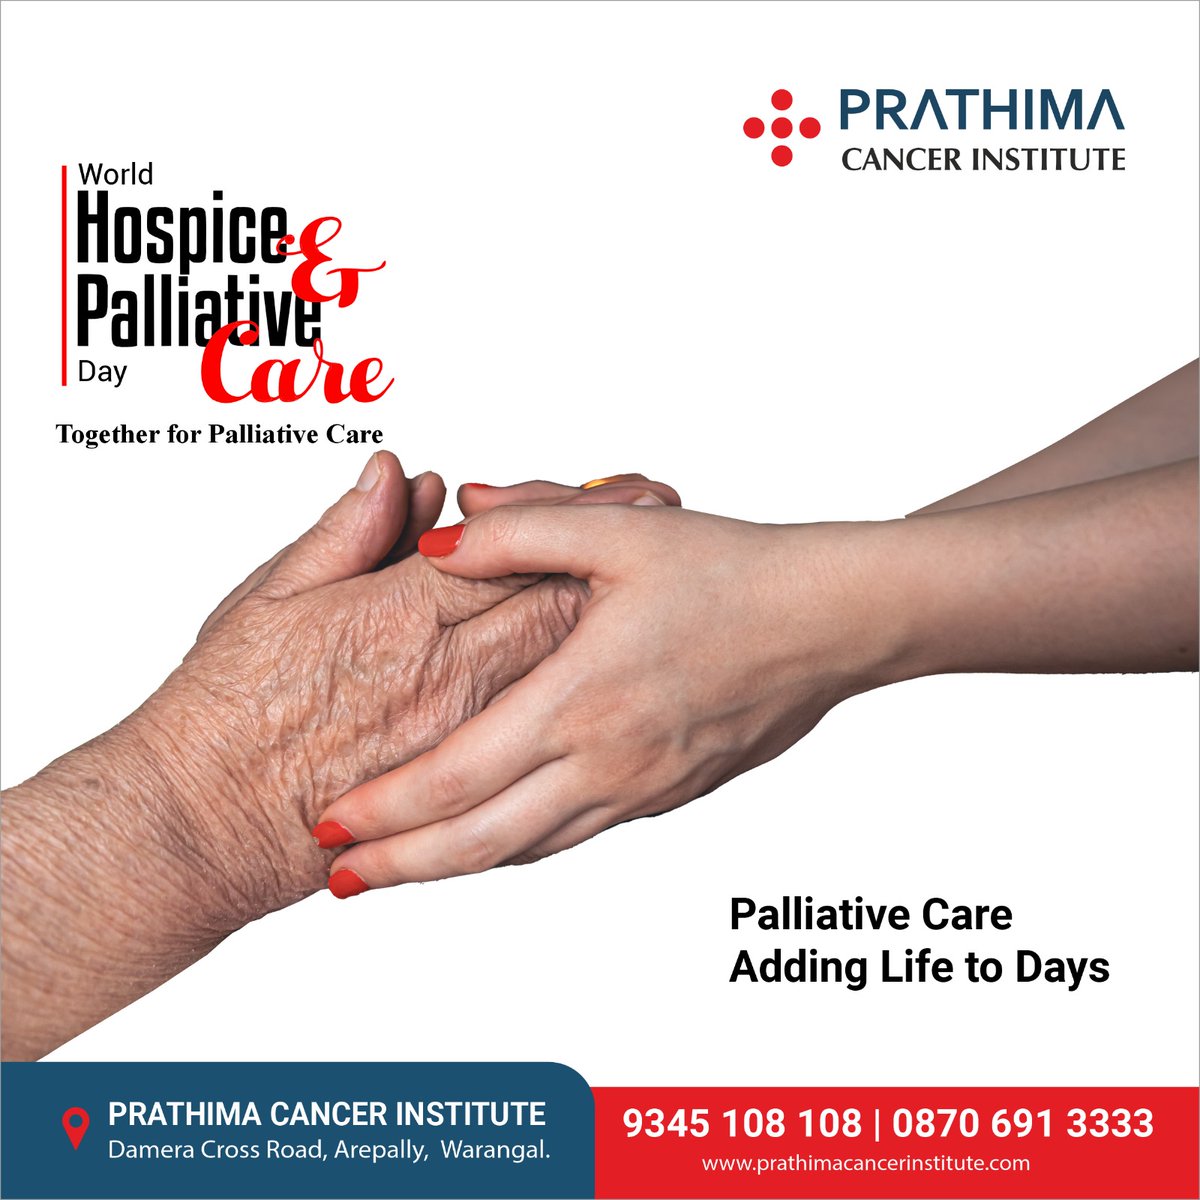 Palliative Care - Adding Life to Days

#HospiceCare #PalliativeCare #QualityofLife #EndOfLifeCare #HospiceSupport #Caregivers #ComfortCare #WHPD #HospiceHeroes #trendingnow #prathimacancerinstitute #prathima #PCI